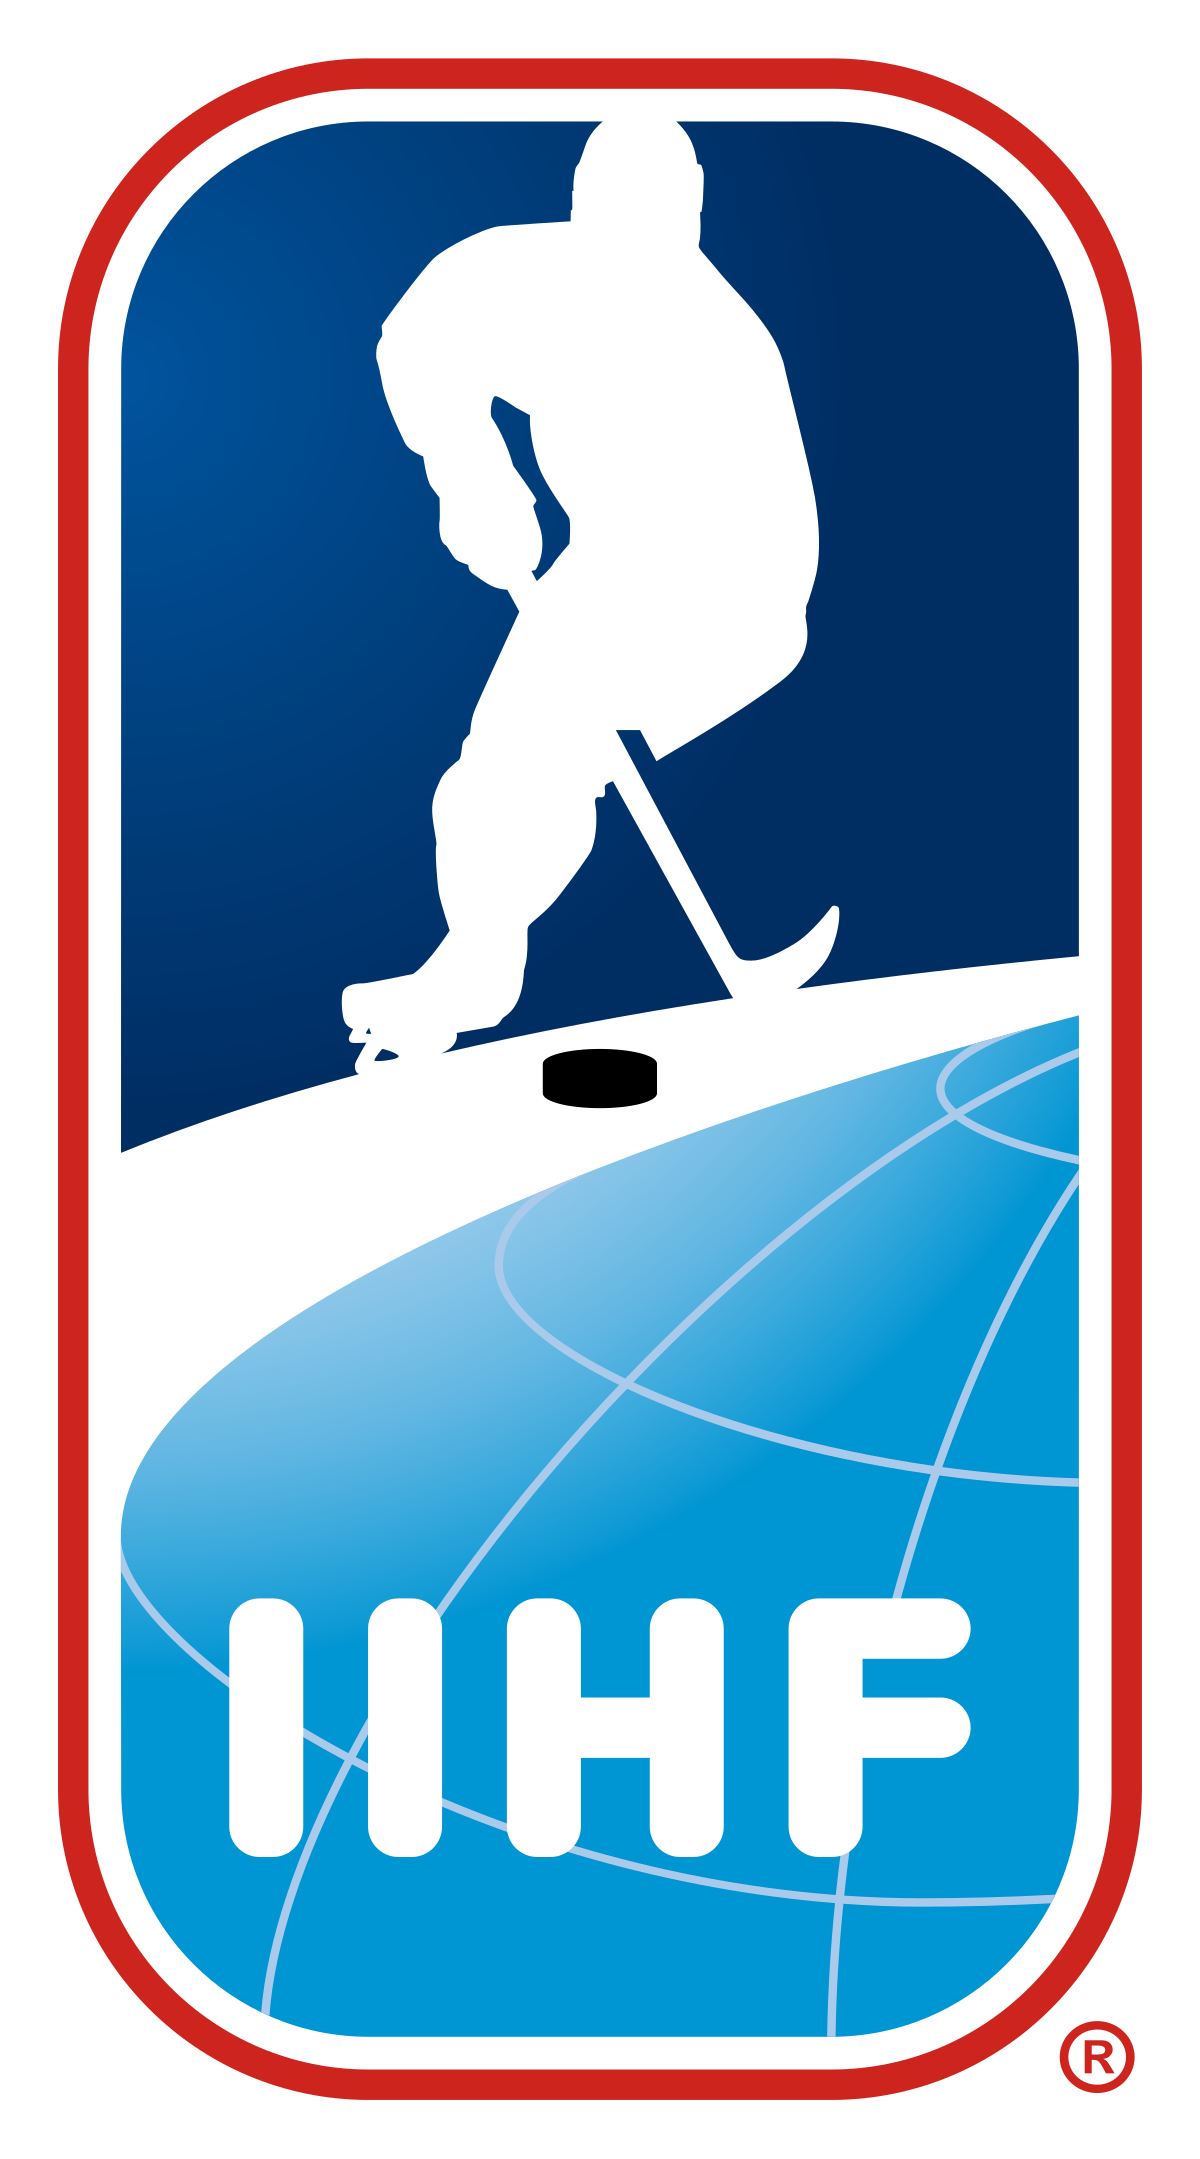 International Ice Hockey Federation - Wikipedia